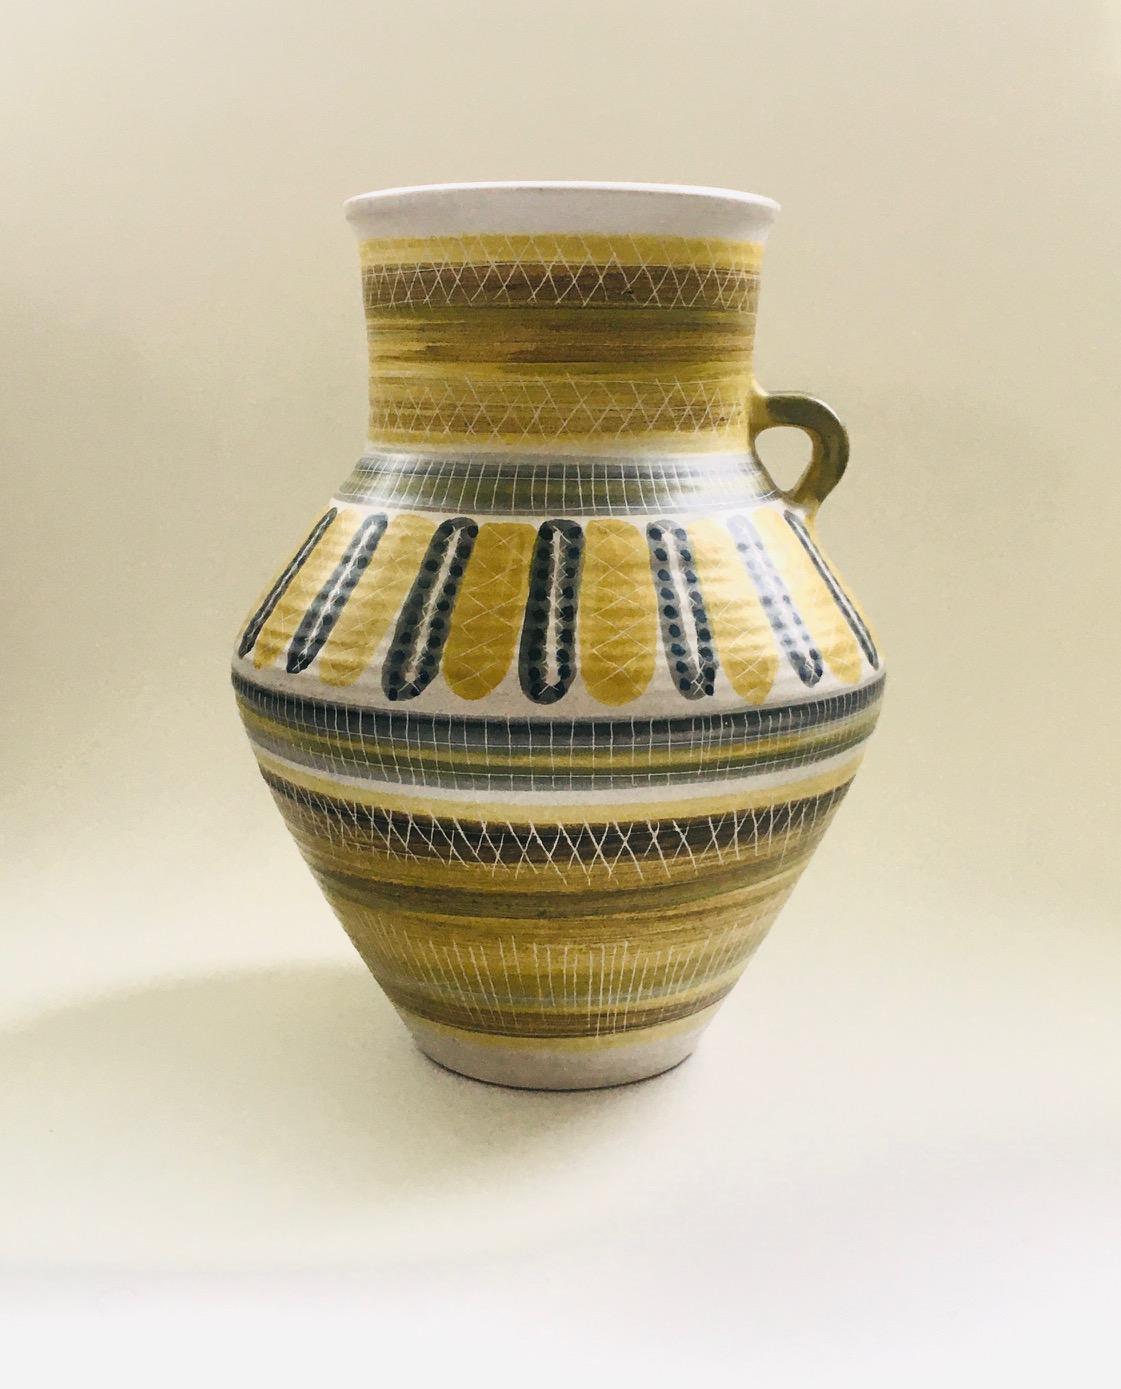 Rare Midcentury Art Pottery Studio Vase by Marcel Guillot, France 1950's For Sale 3